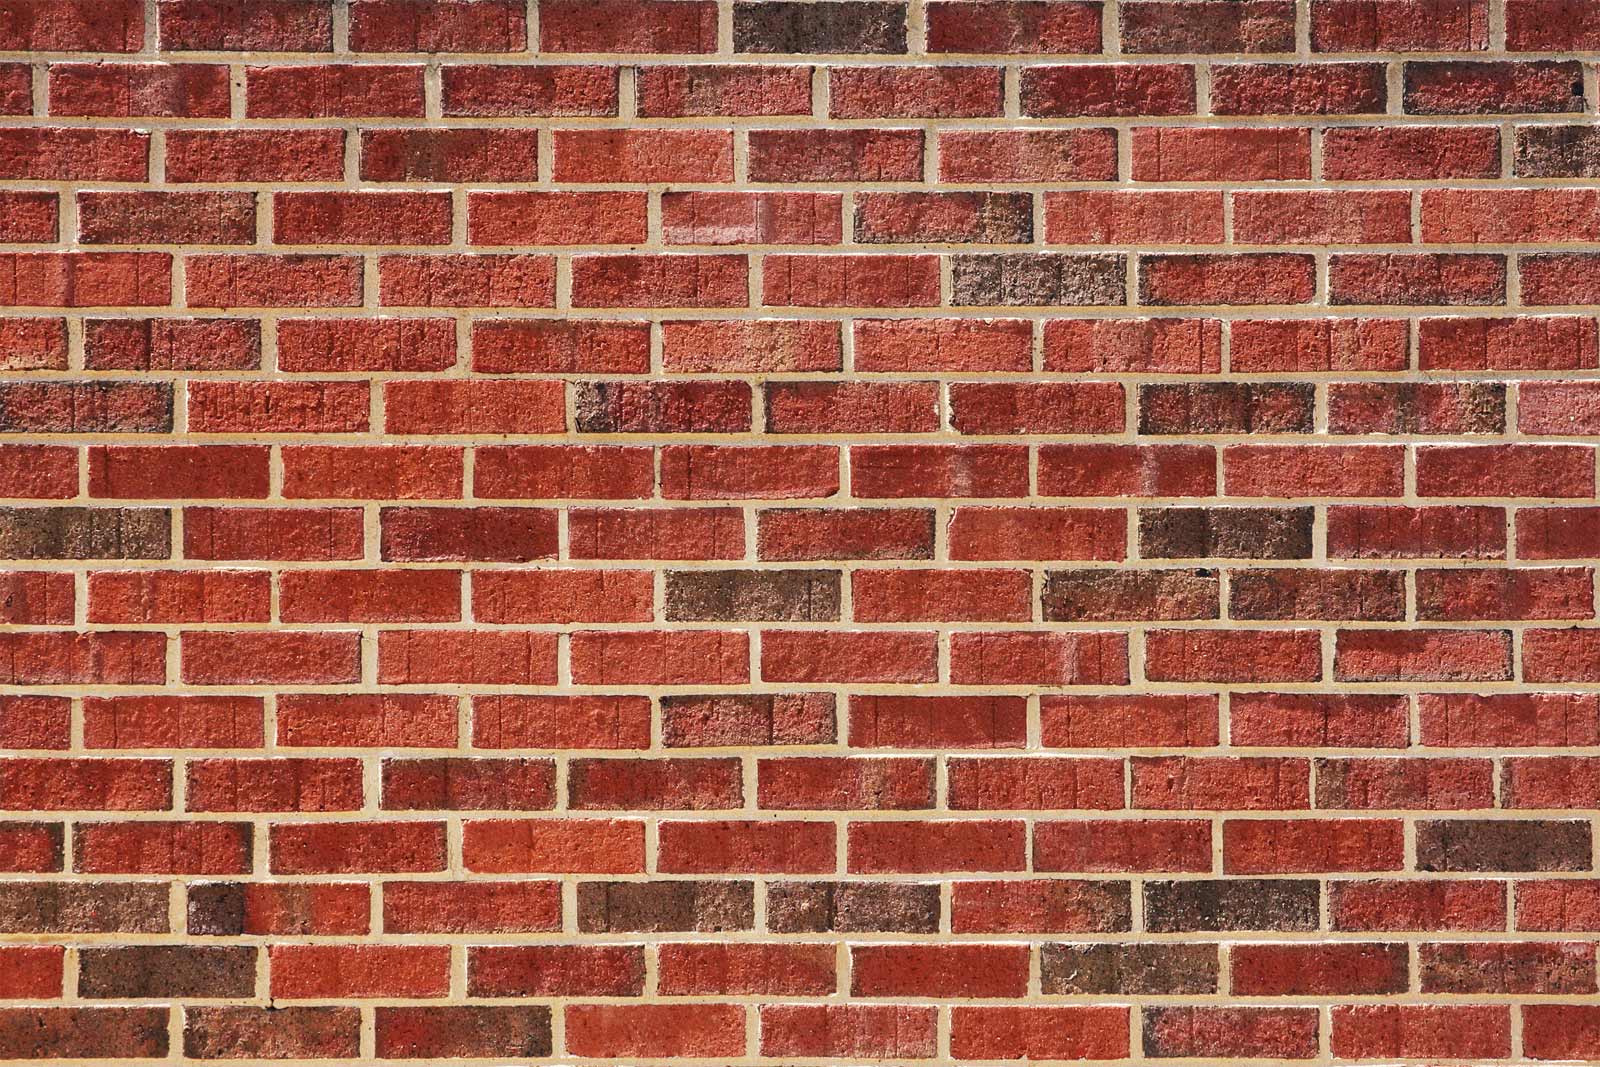 20 Brick Wall Designs Images